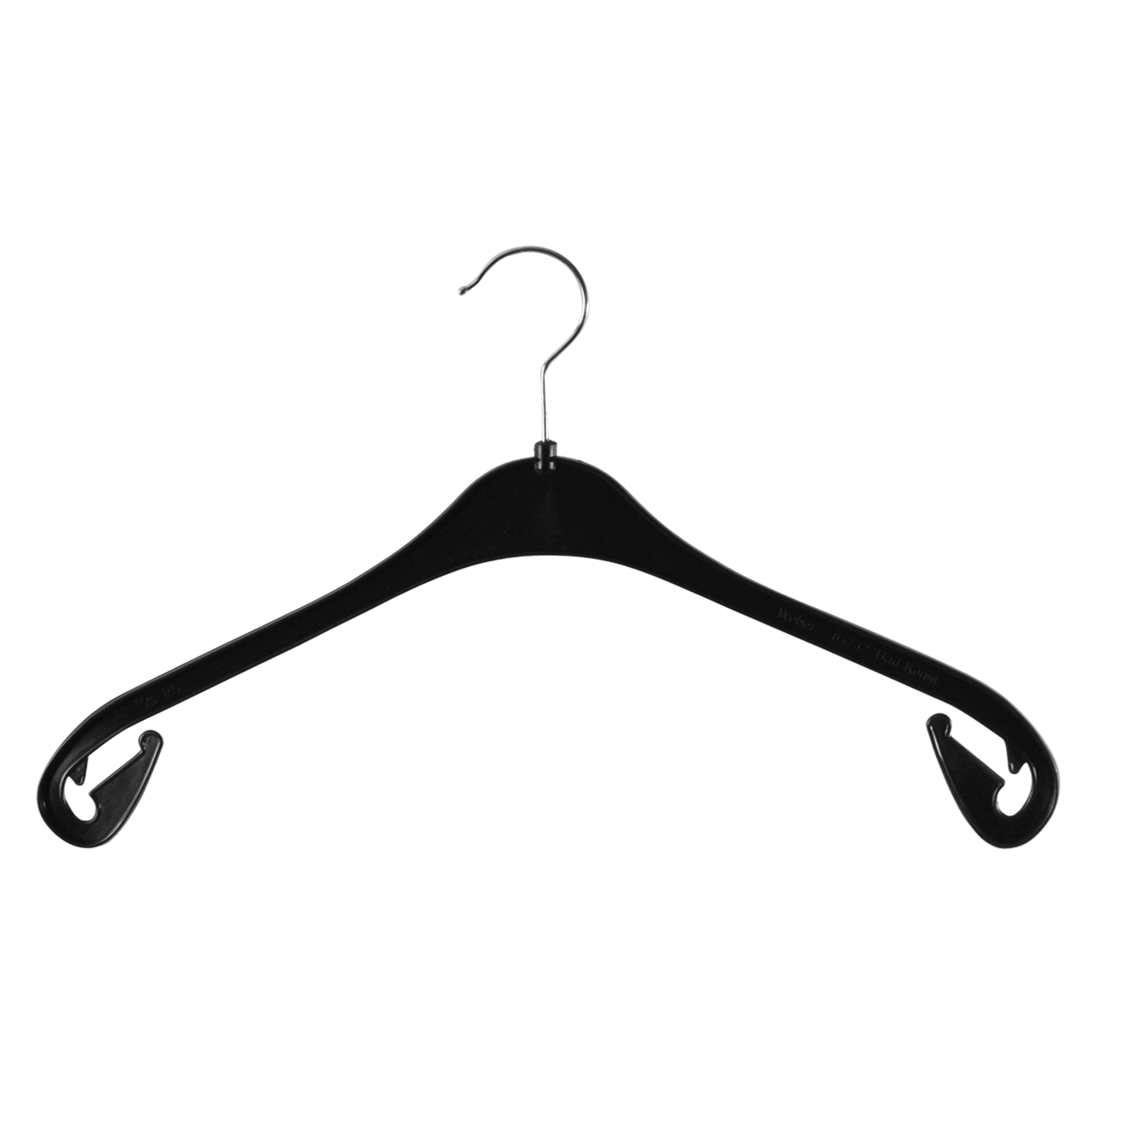 Kunststoff-Kleiderbügel schwarz, 43cm